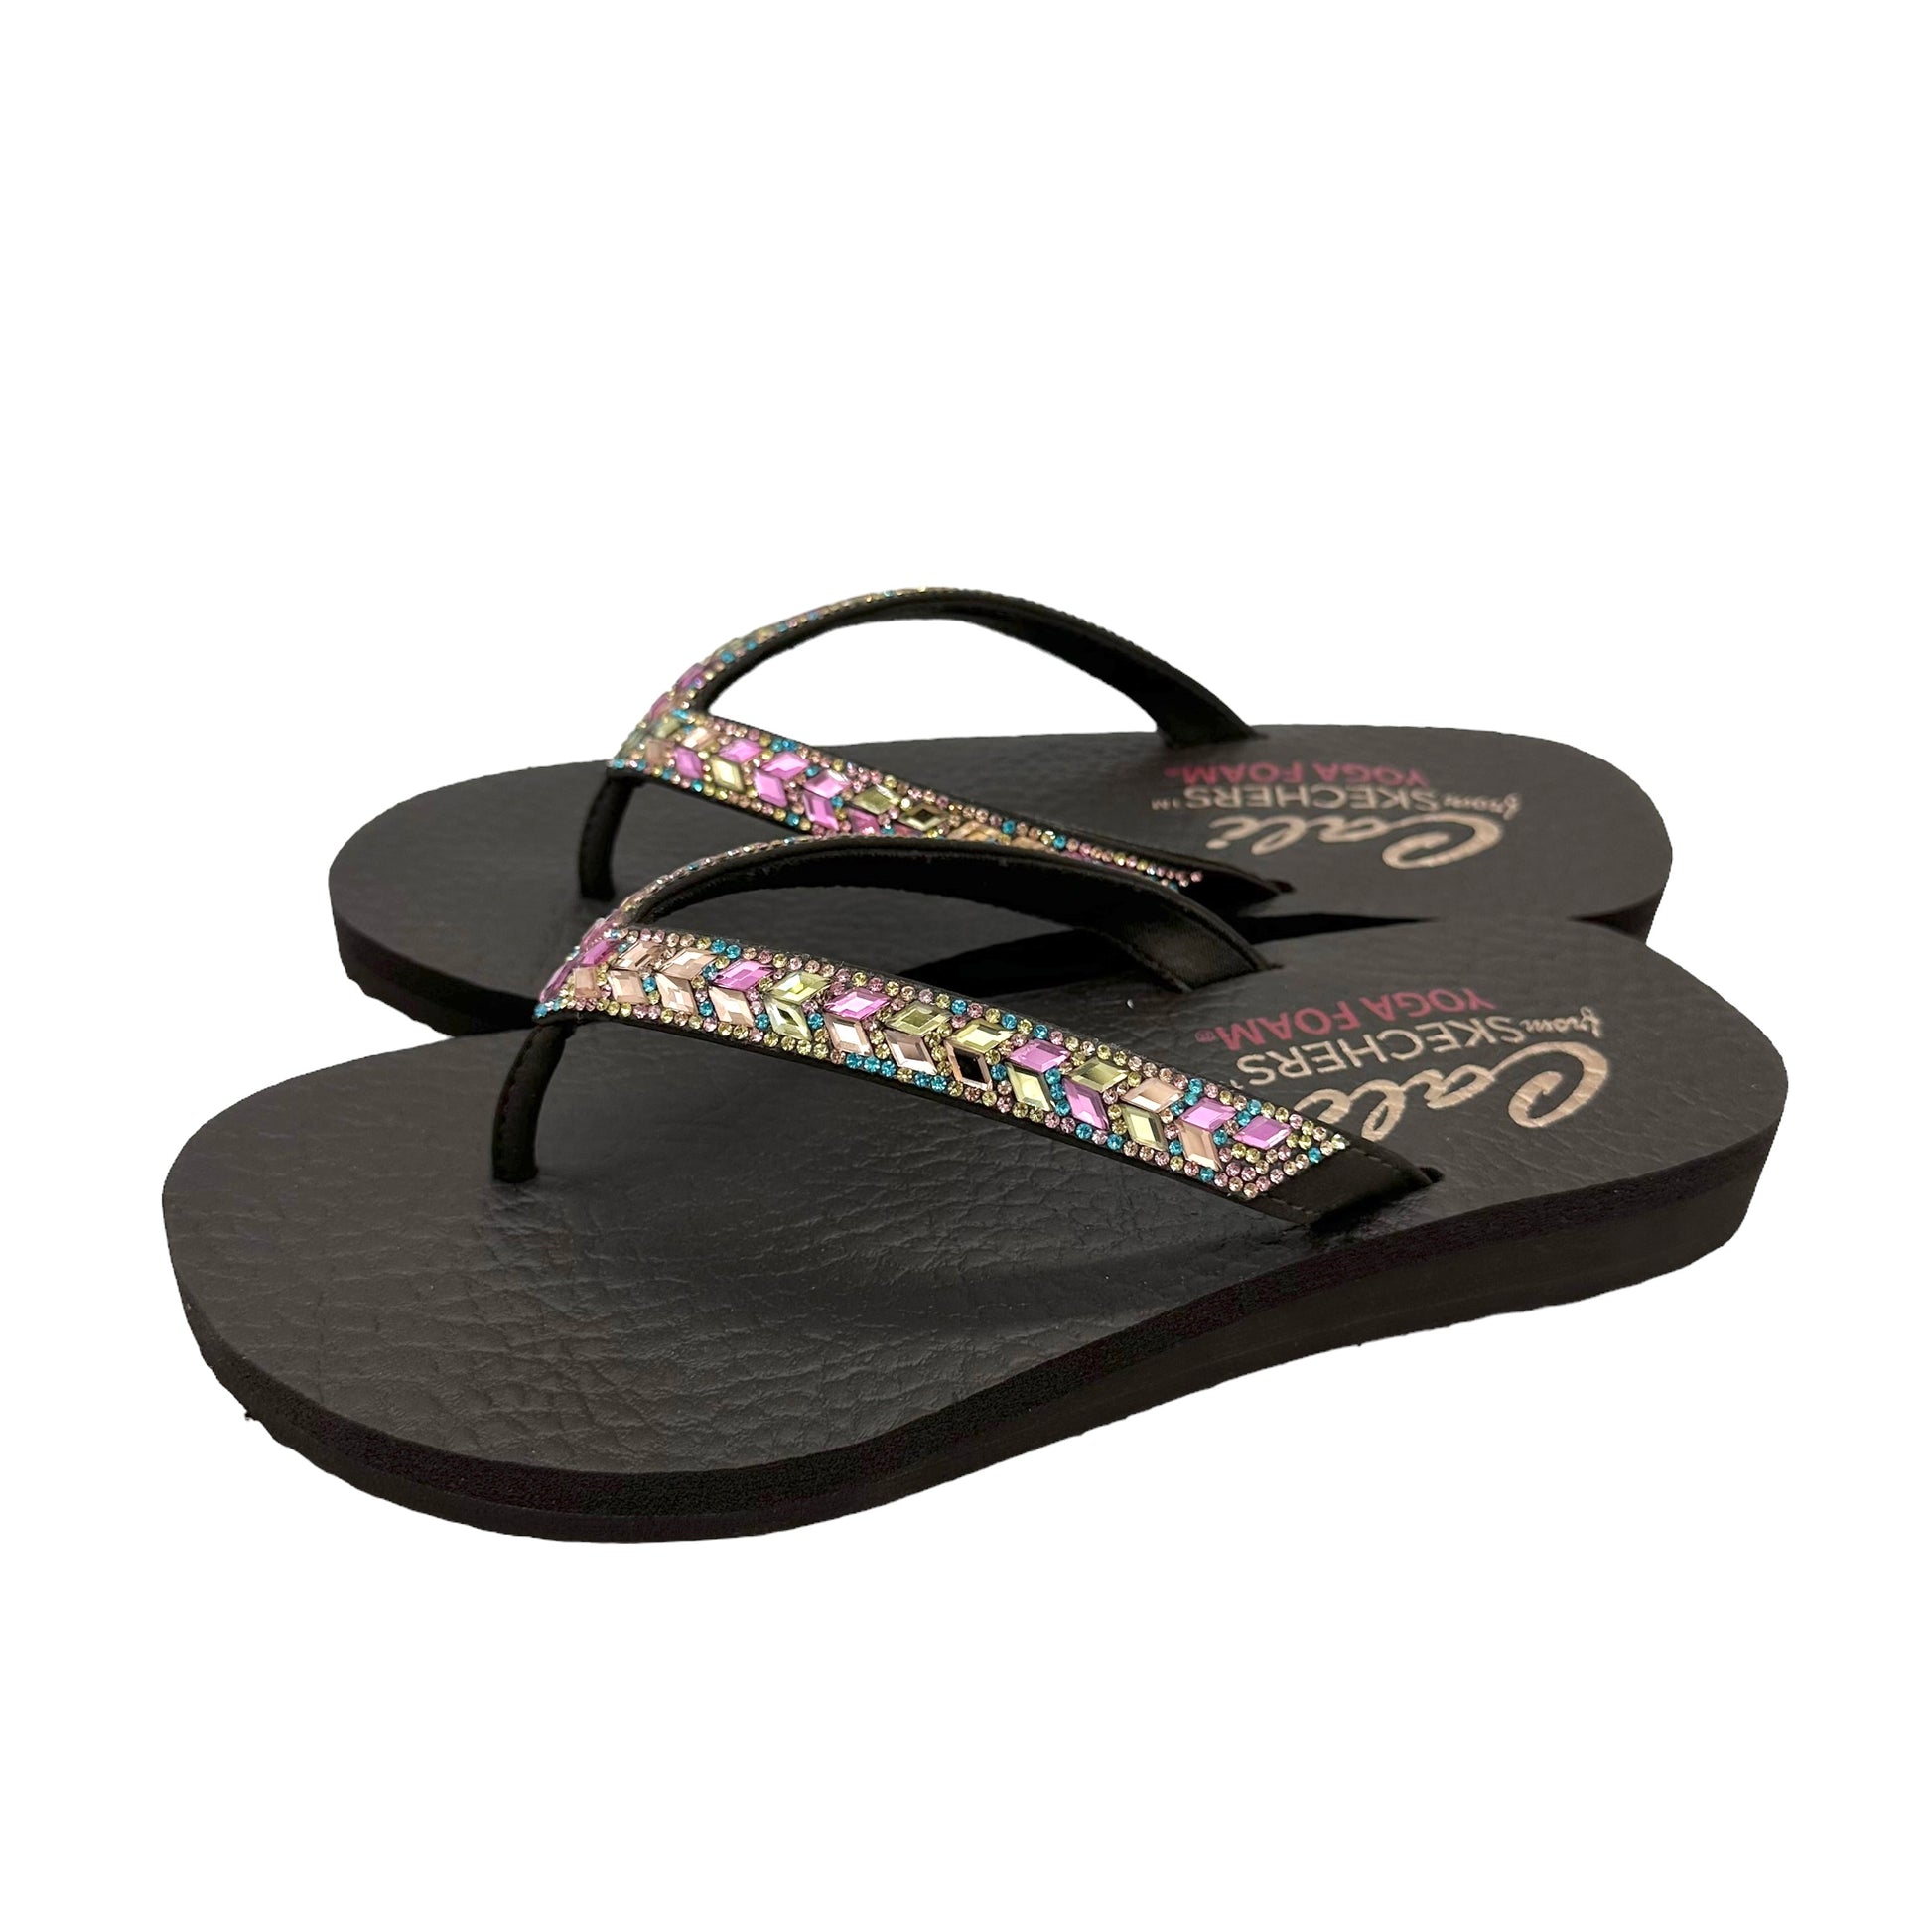 Skechers Yoga Foam Sandals Black Size 9 - $11 (72% Off Retail) New